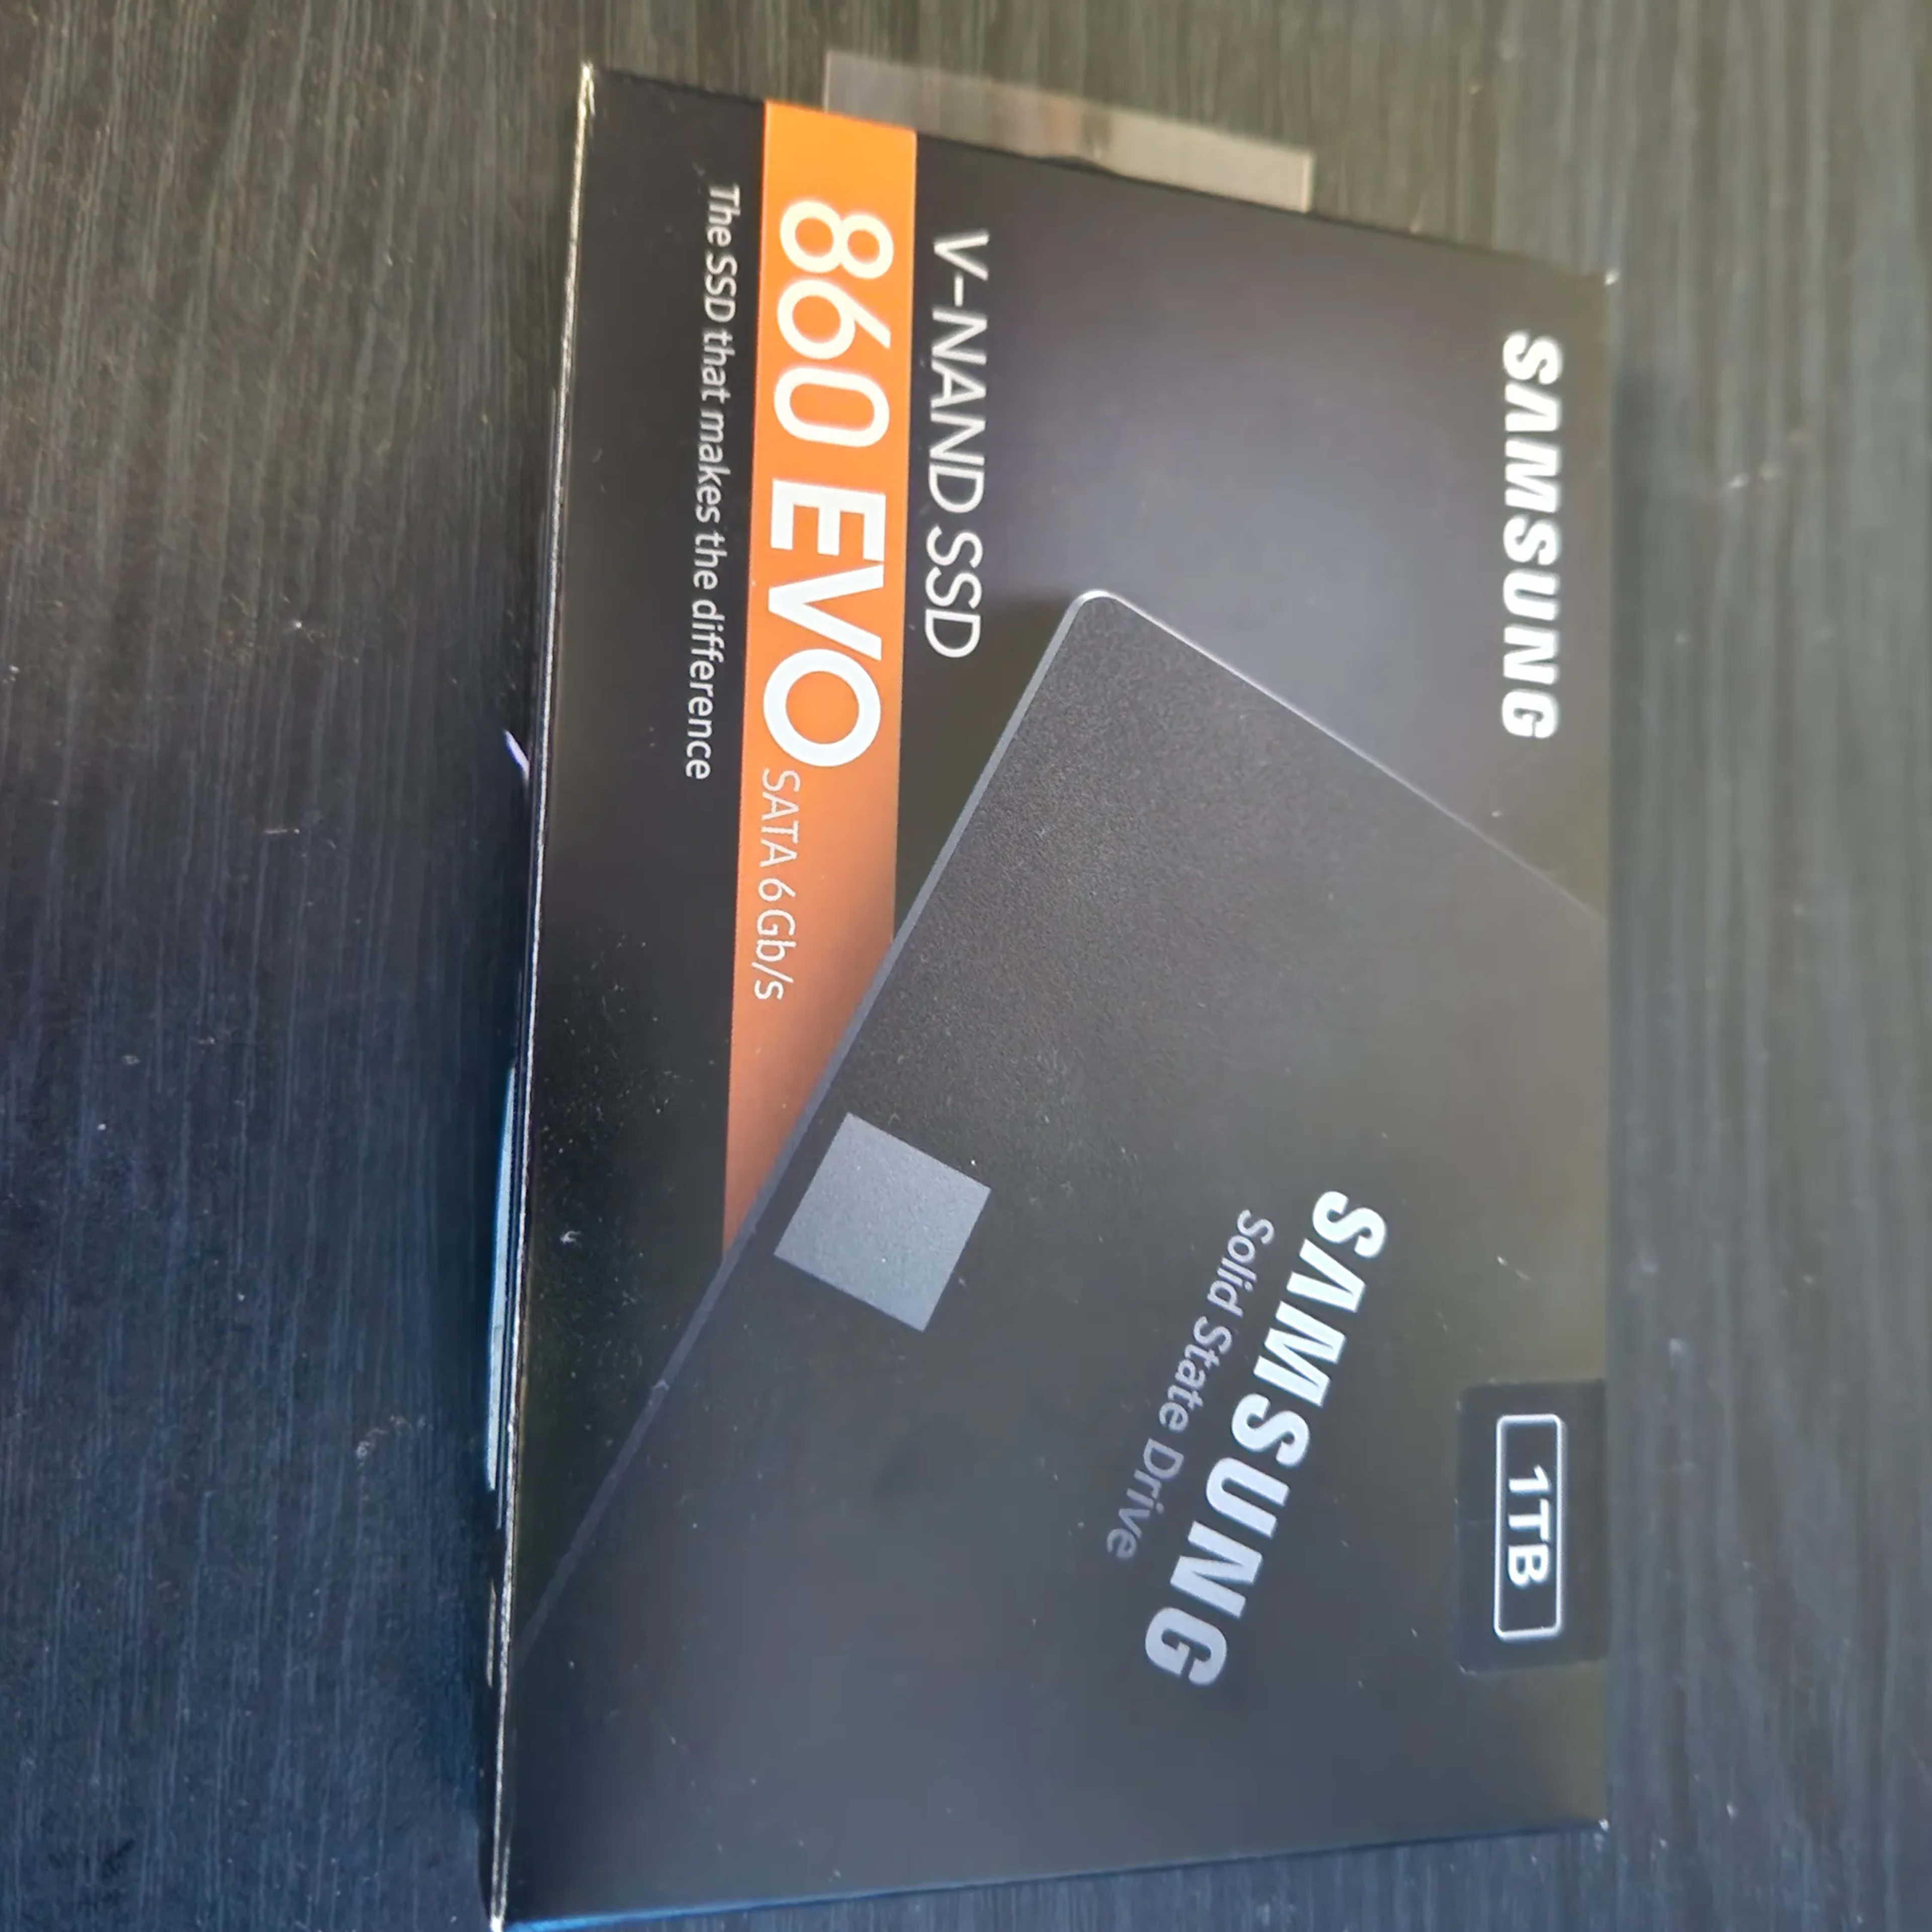 Samsung 860 Evo 1 TB 2.5" Solid State Drive